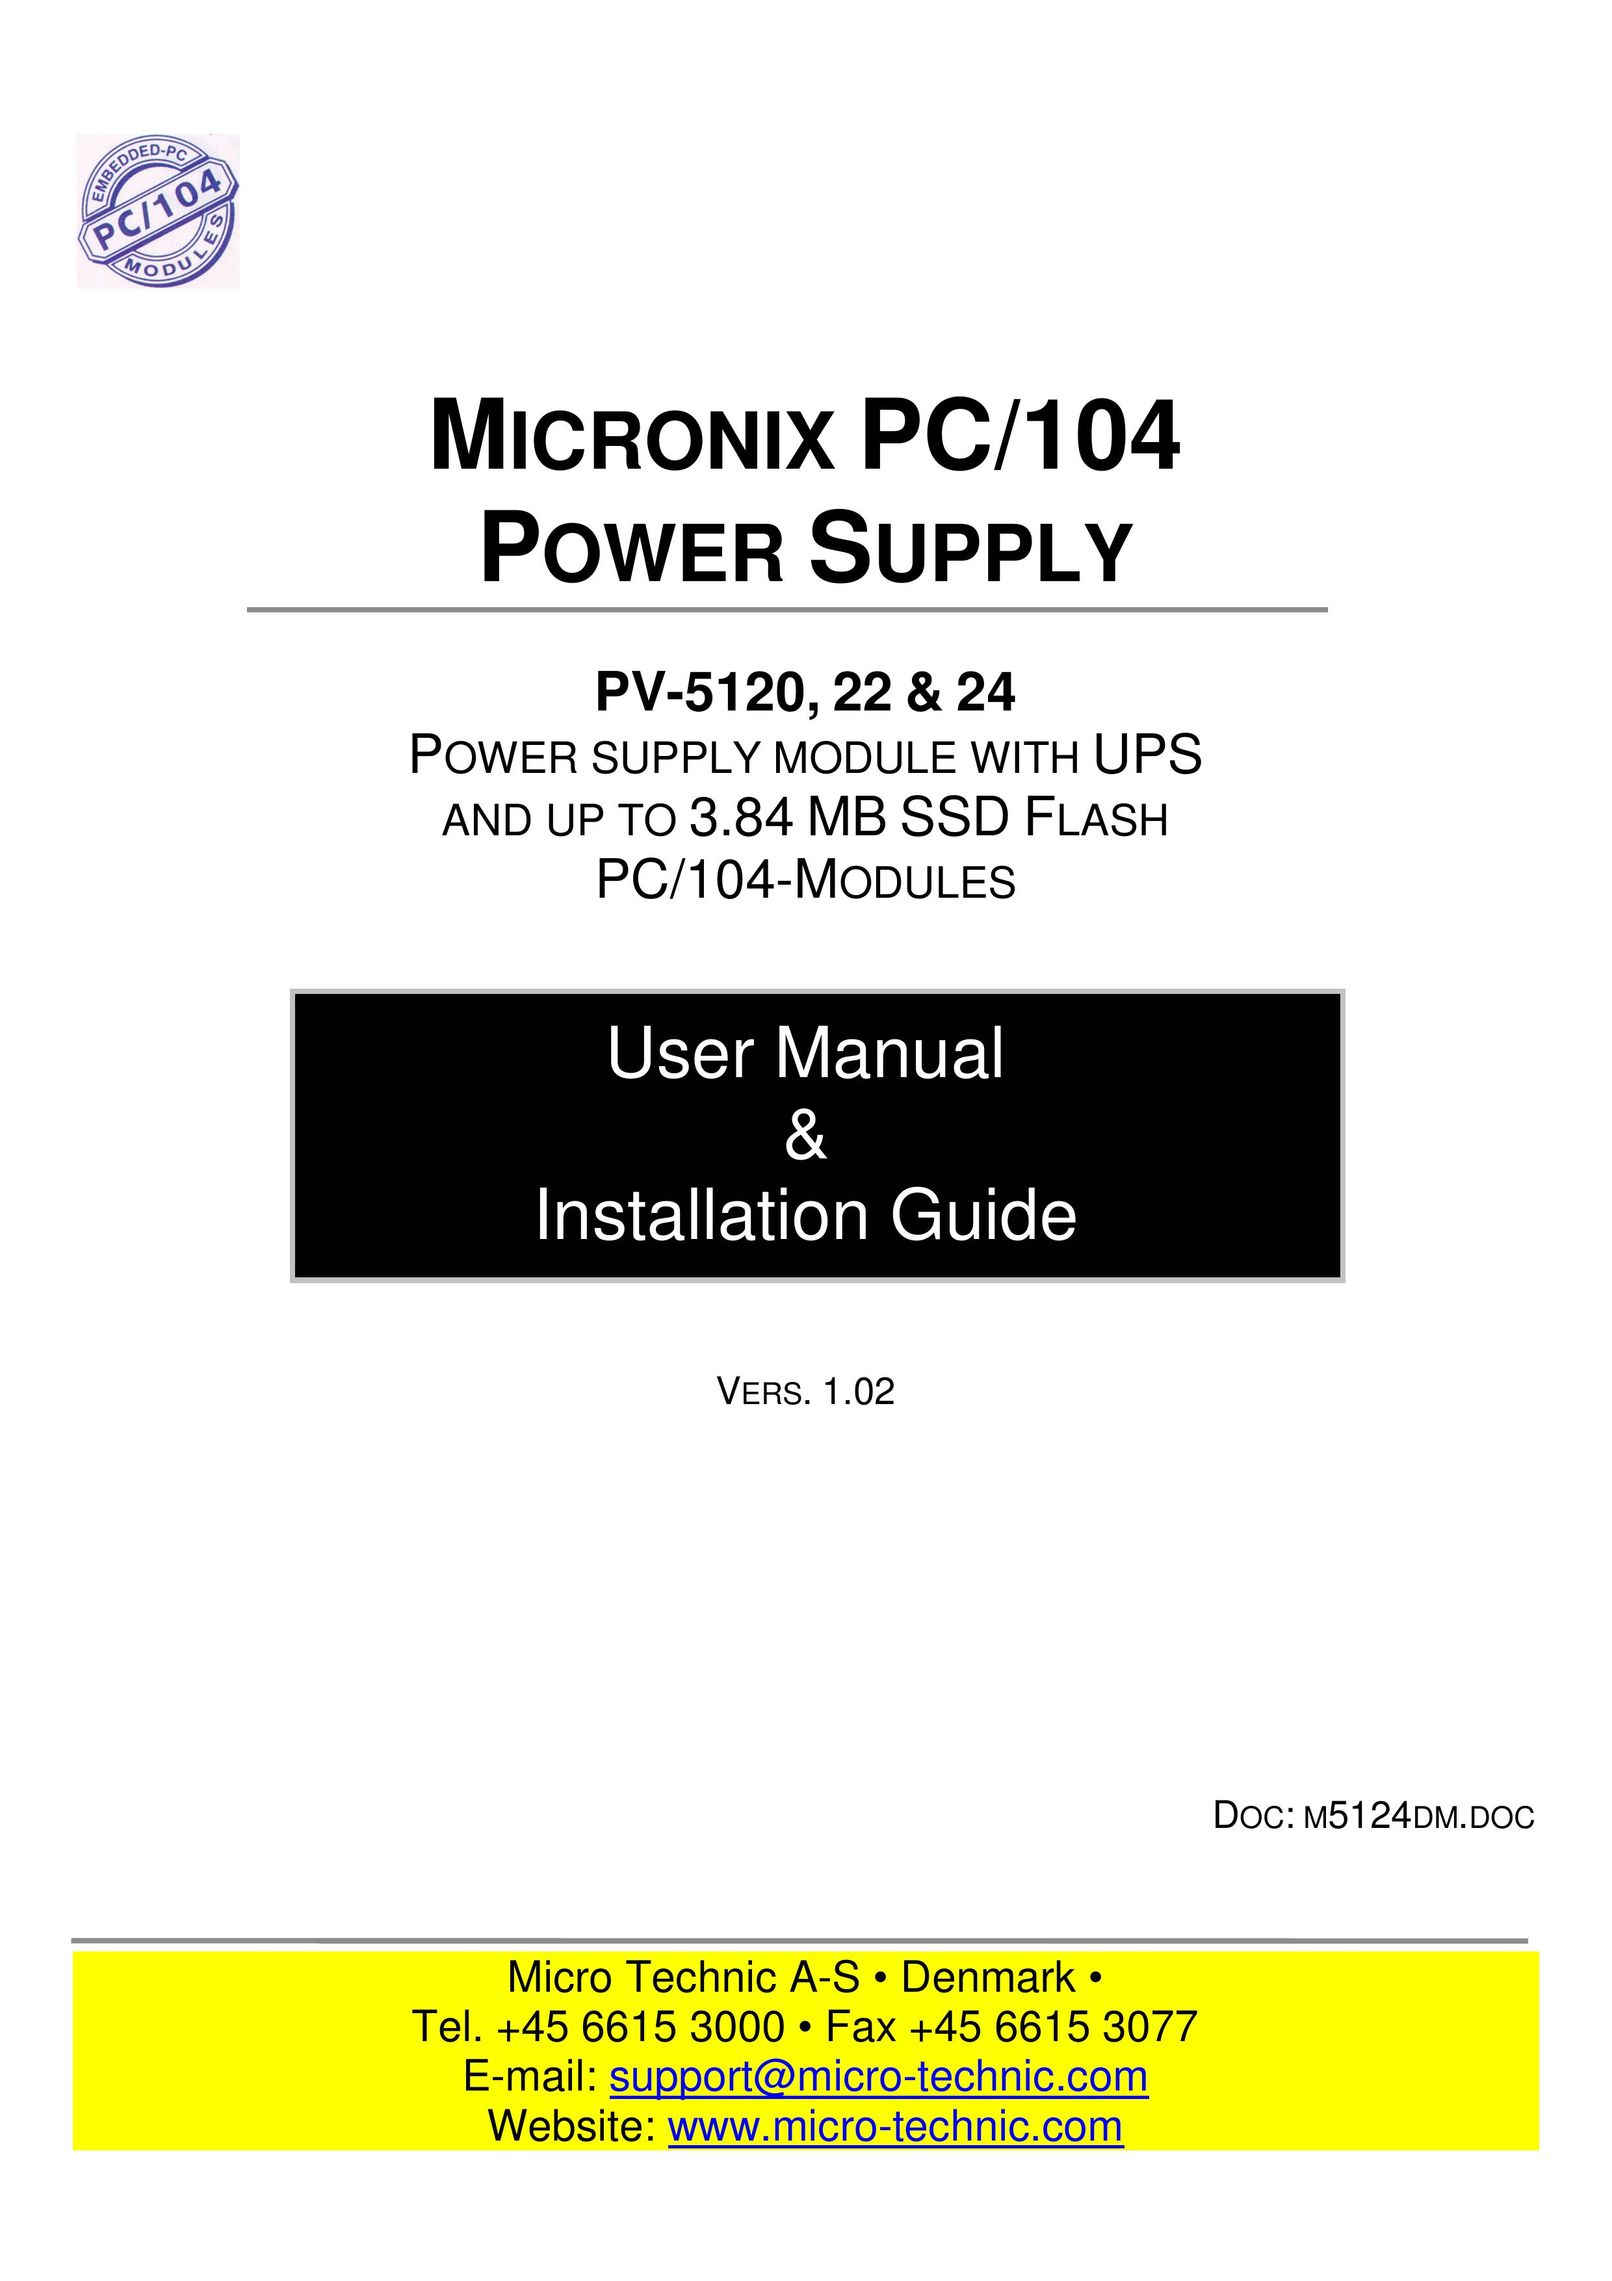 Micro Technic PV-5124 Power Supply User Manual